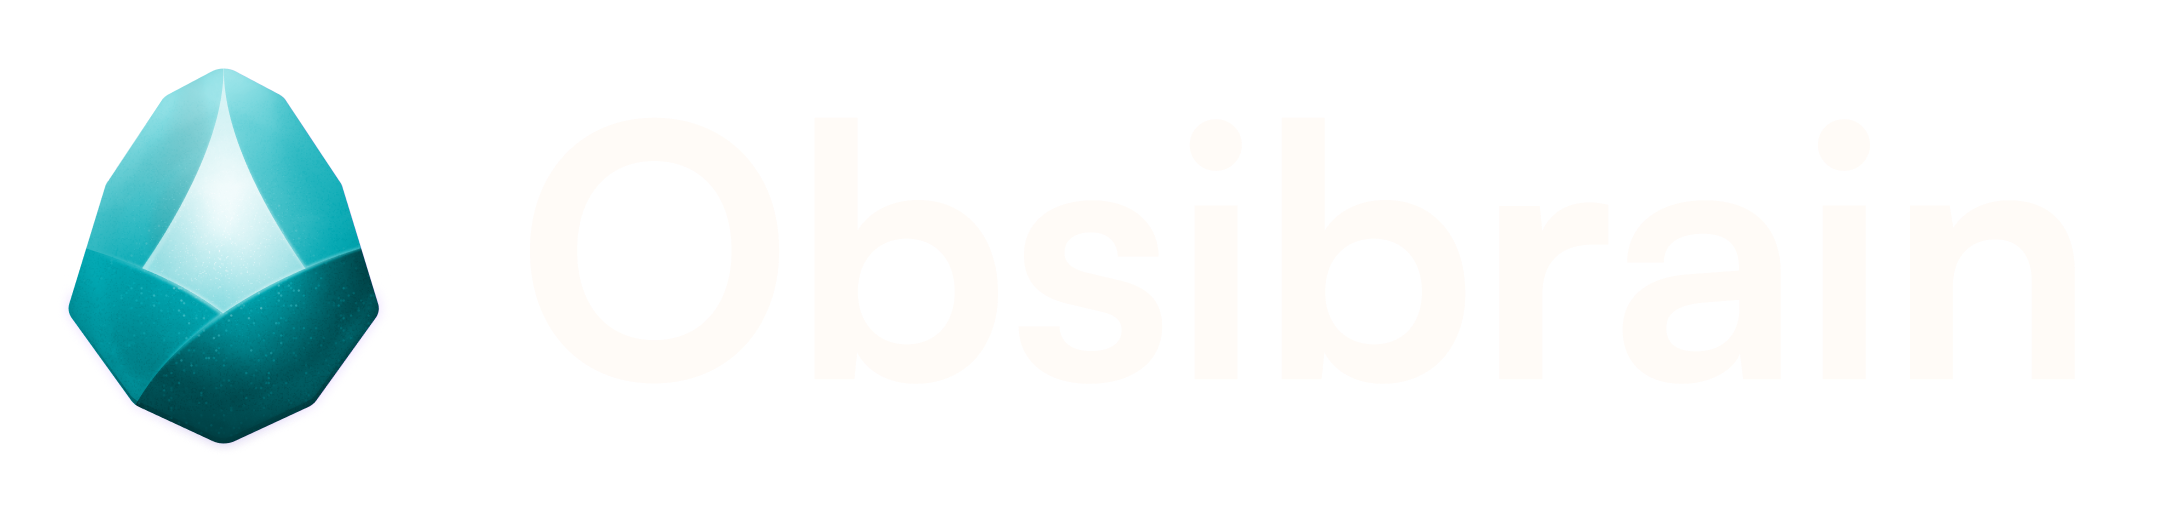 obsibrain logo